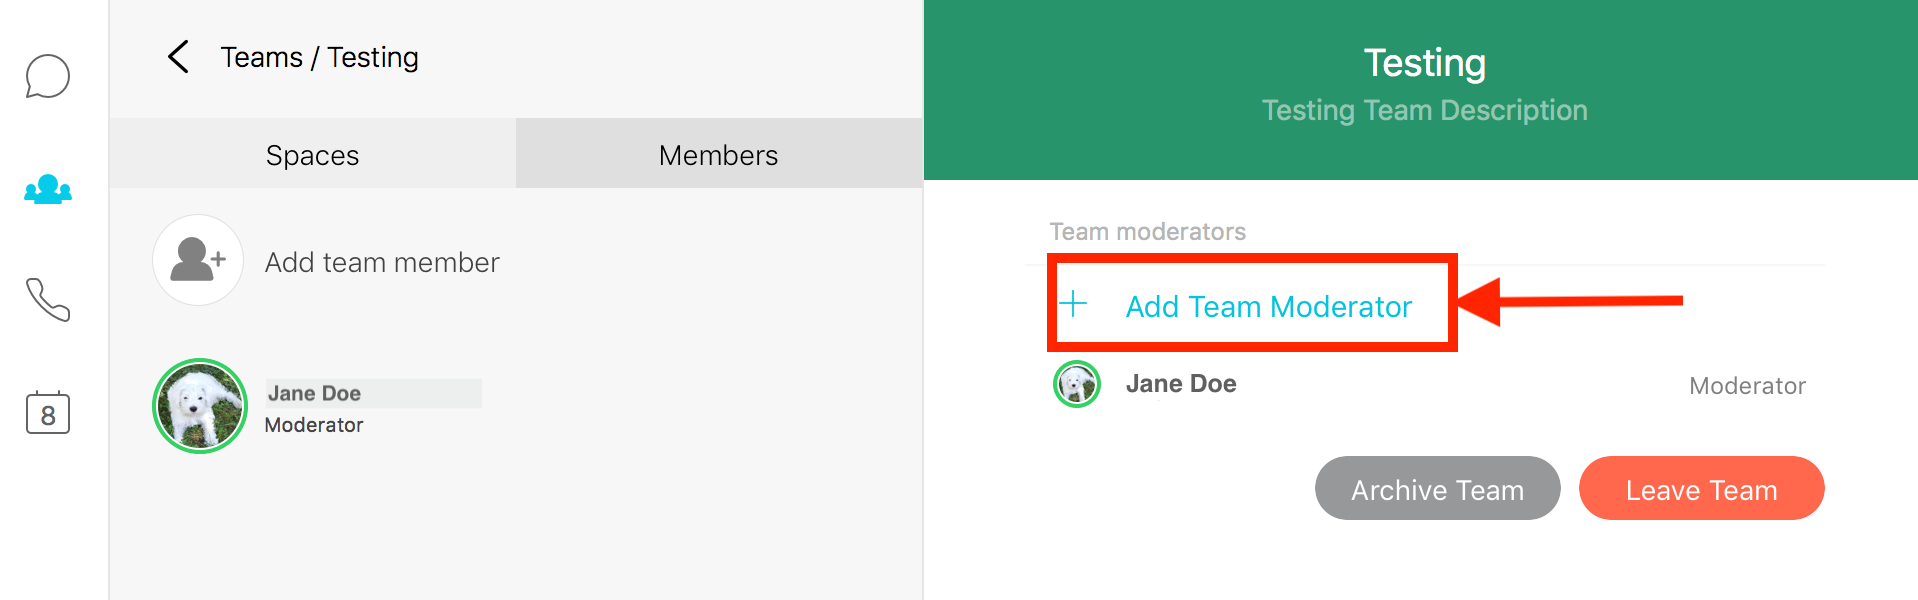 Add additional Moderator to Team